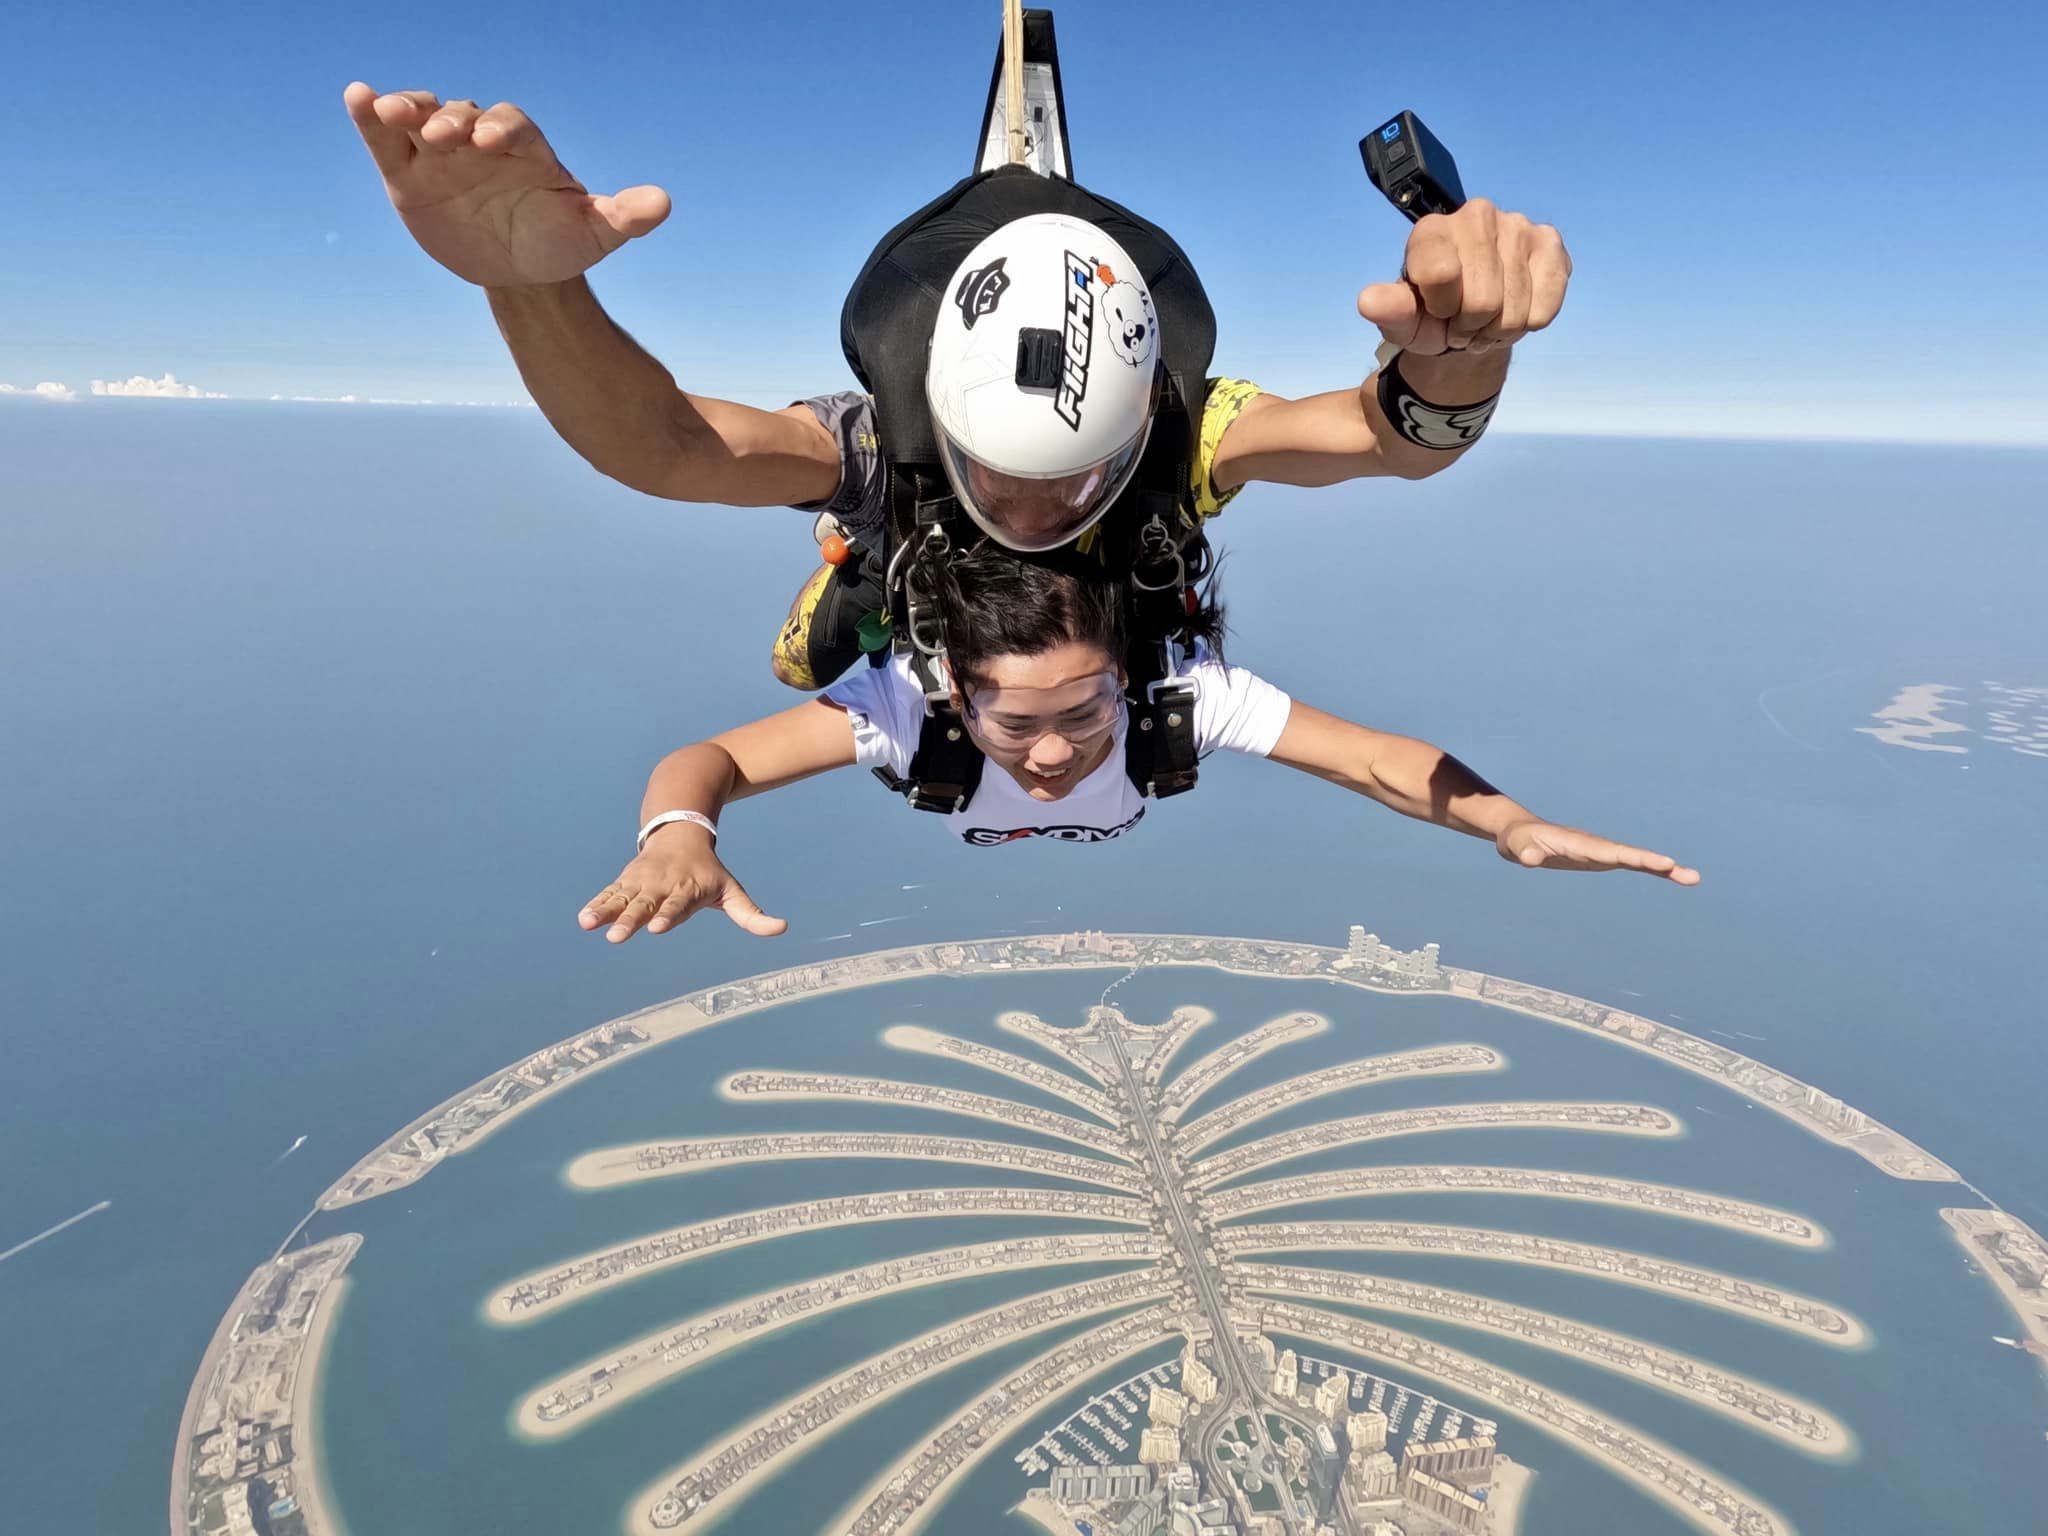 Skydive Dubai - Palm skydiving